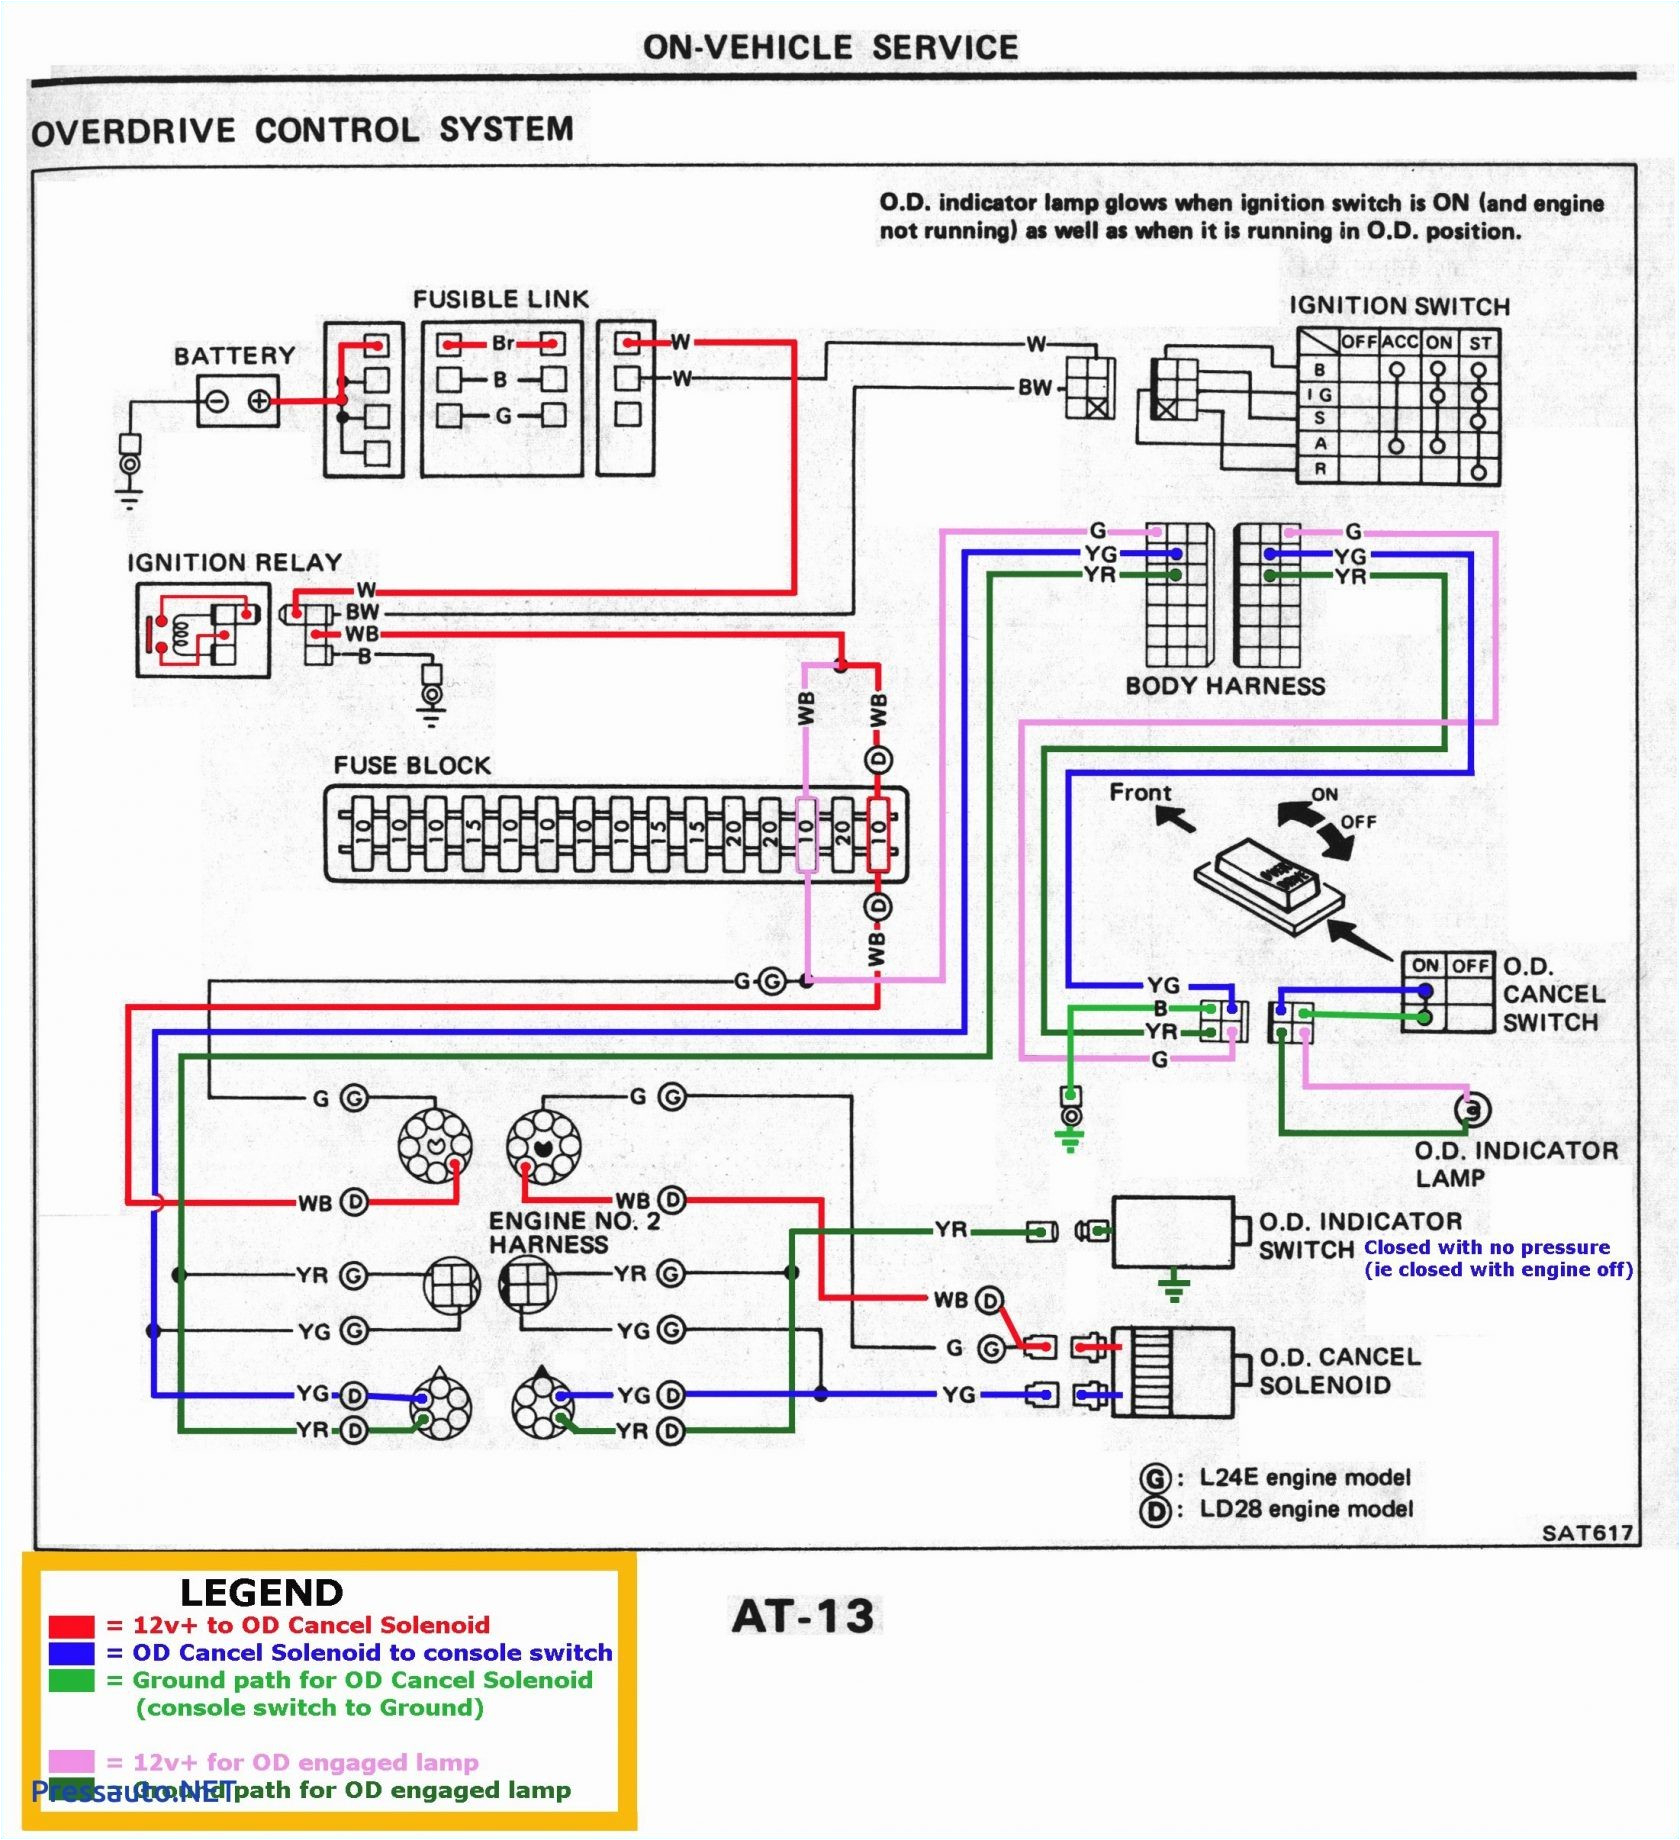 1984 toyota Pickup Alternator Wiring Diagram 1977 Chevy Truck Wiring Diagram Kipas Ulakan Kultur Im